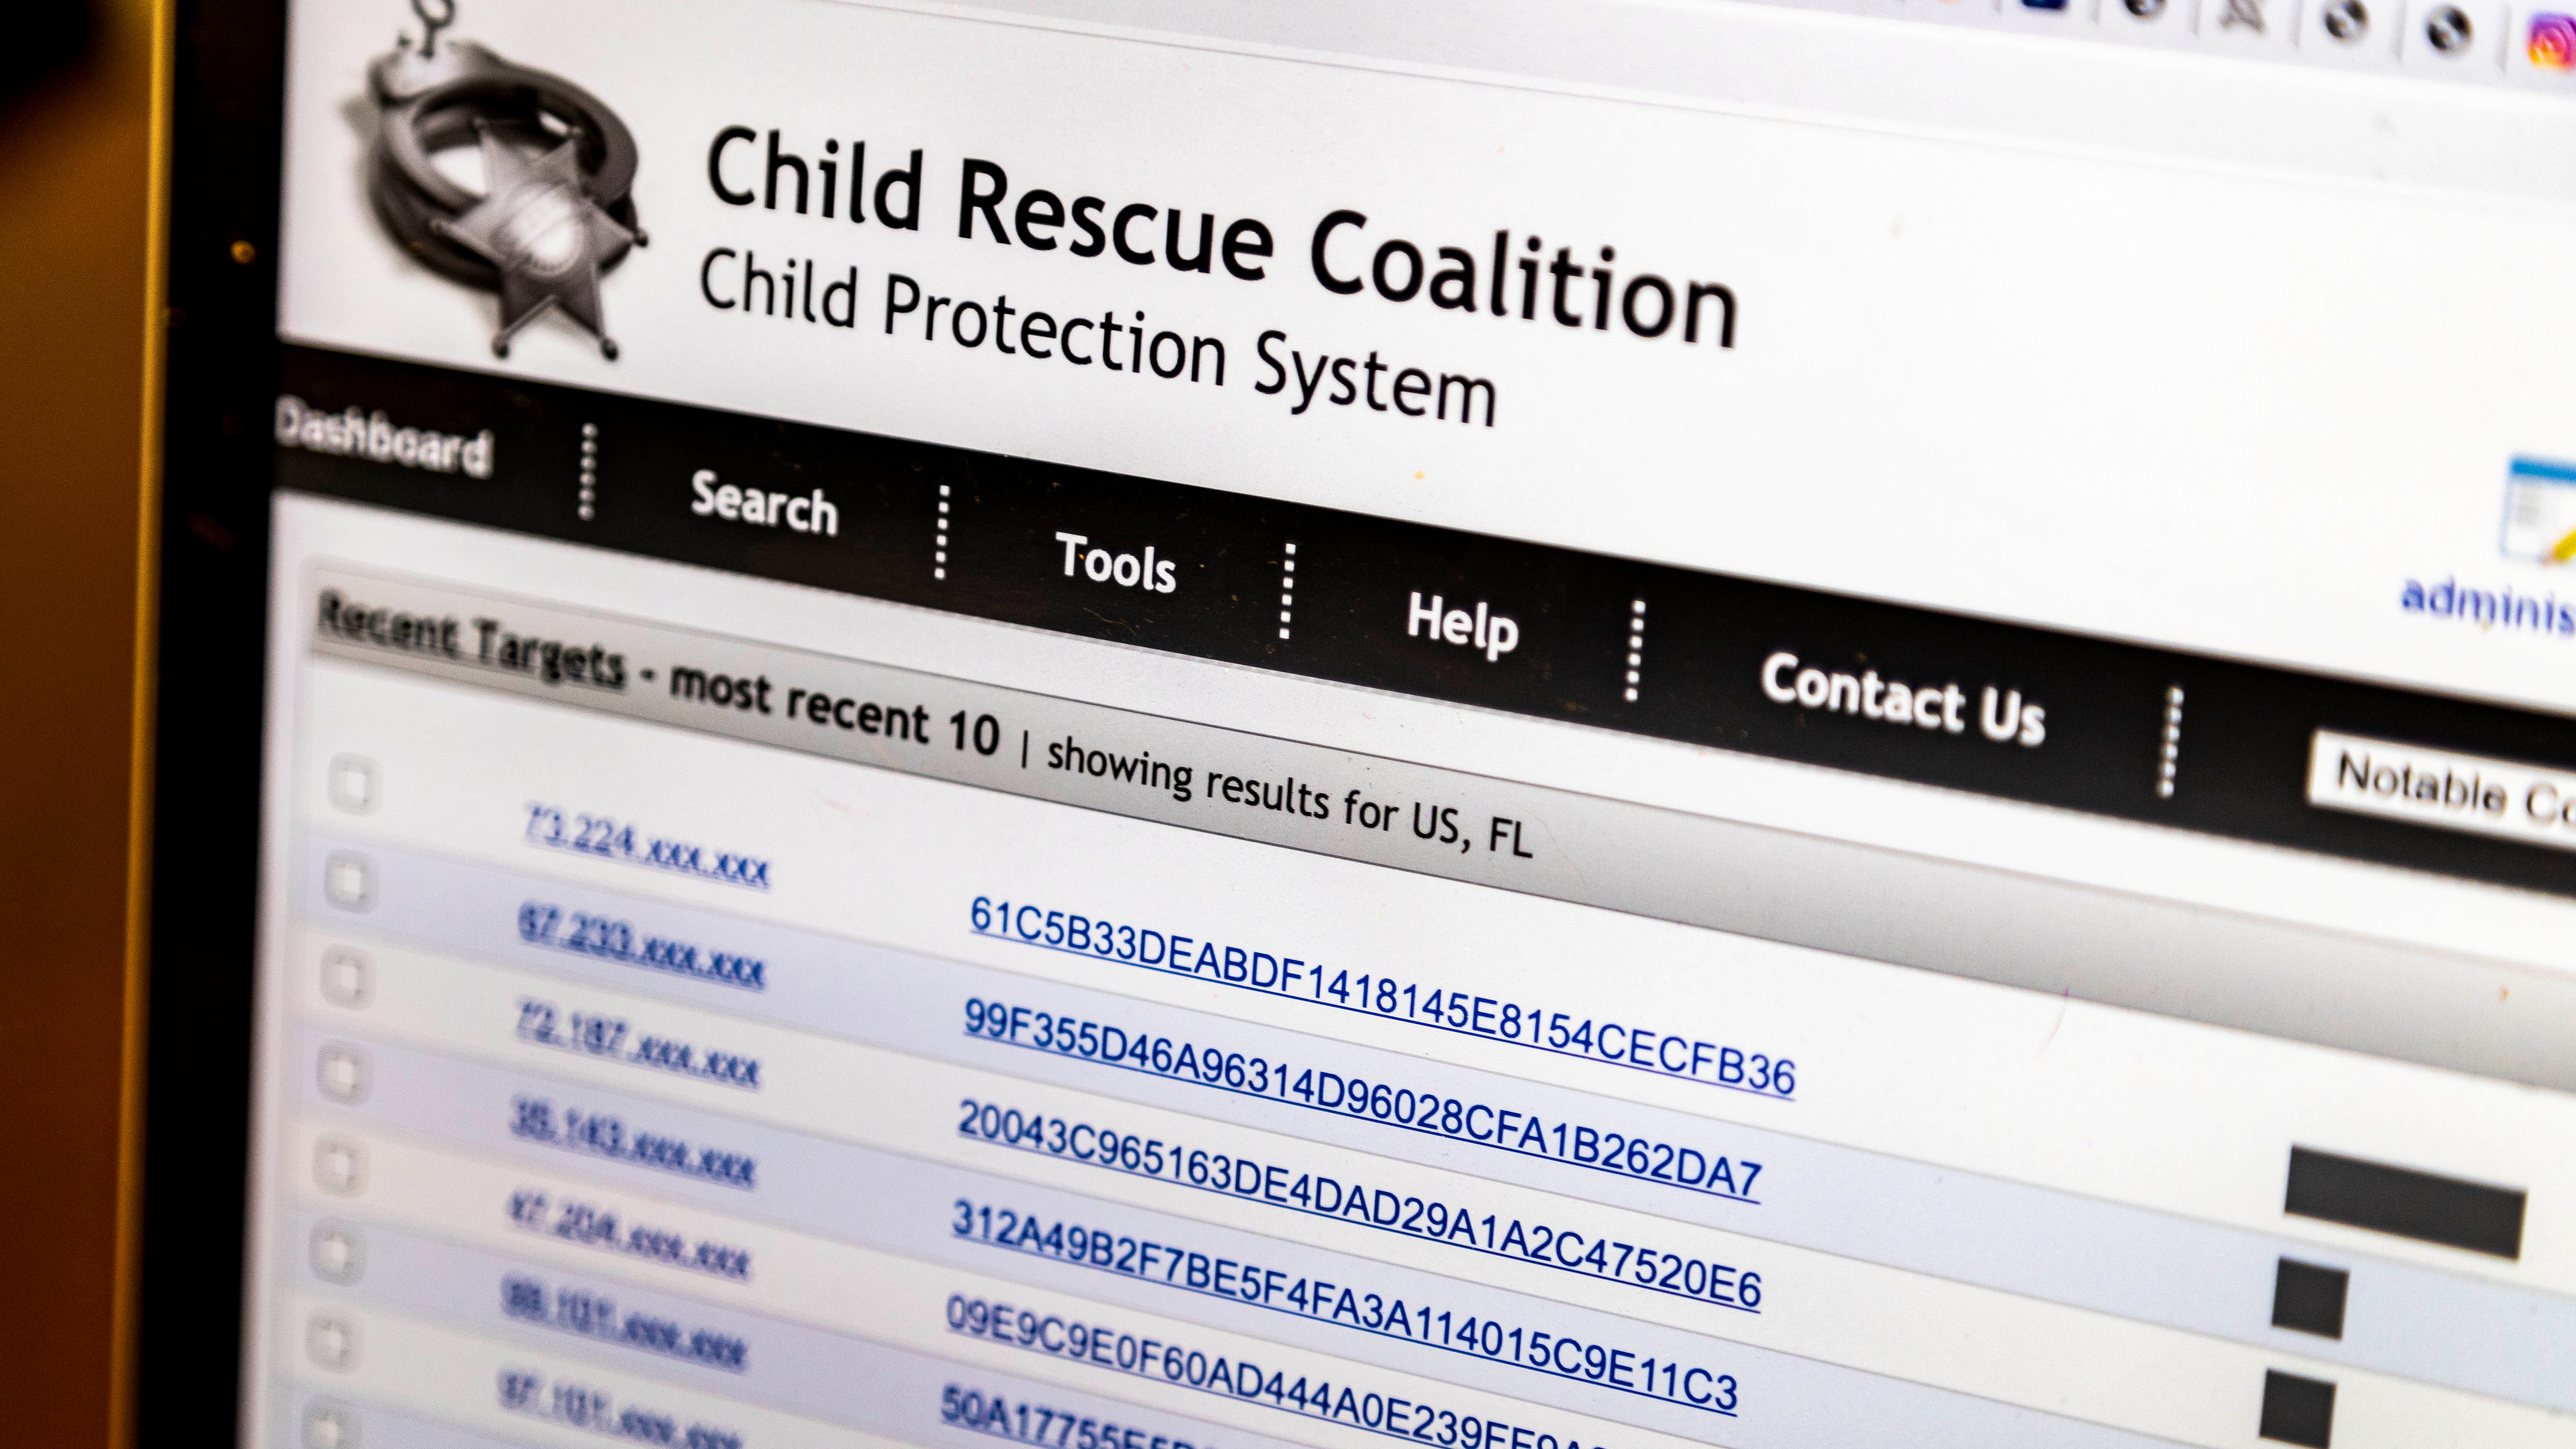 Xxx Rep Videos Com - Online child sex abuse at a crisis level: Can Biden help solve it?